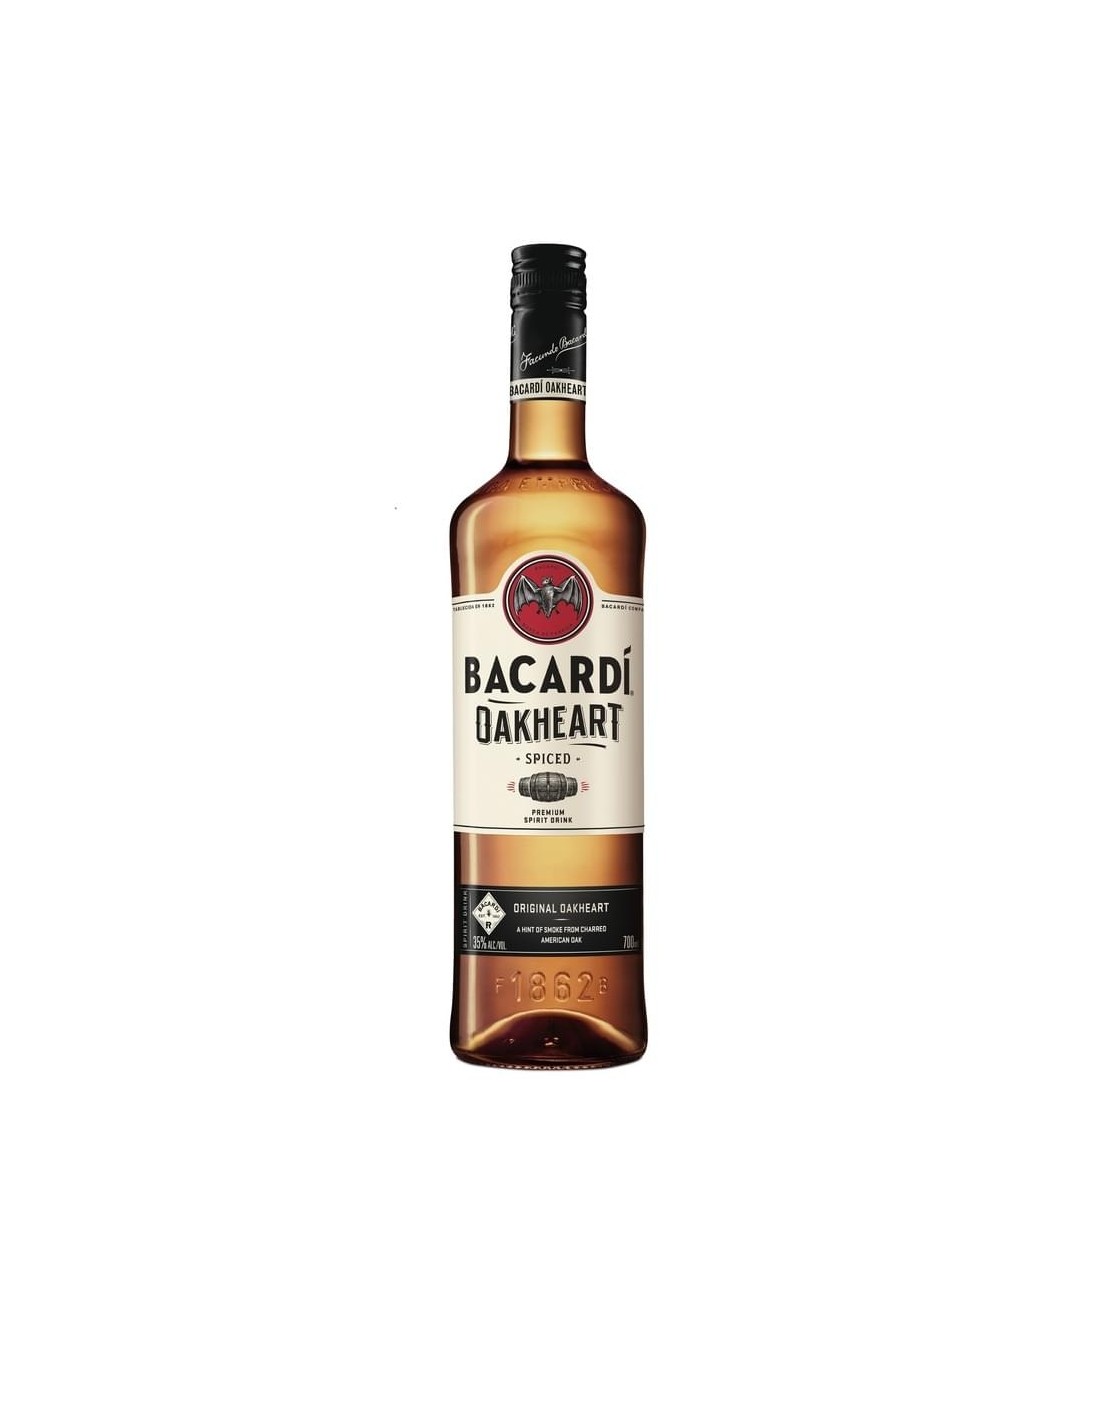 Rom Bacardi Oakheart, 35% alc., 1L, Cuba alcooldiscount.ro